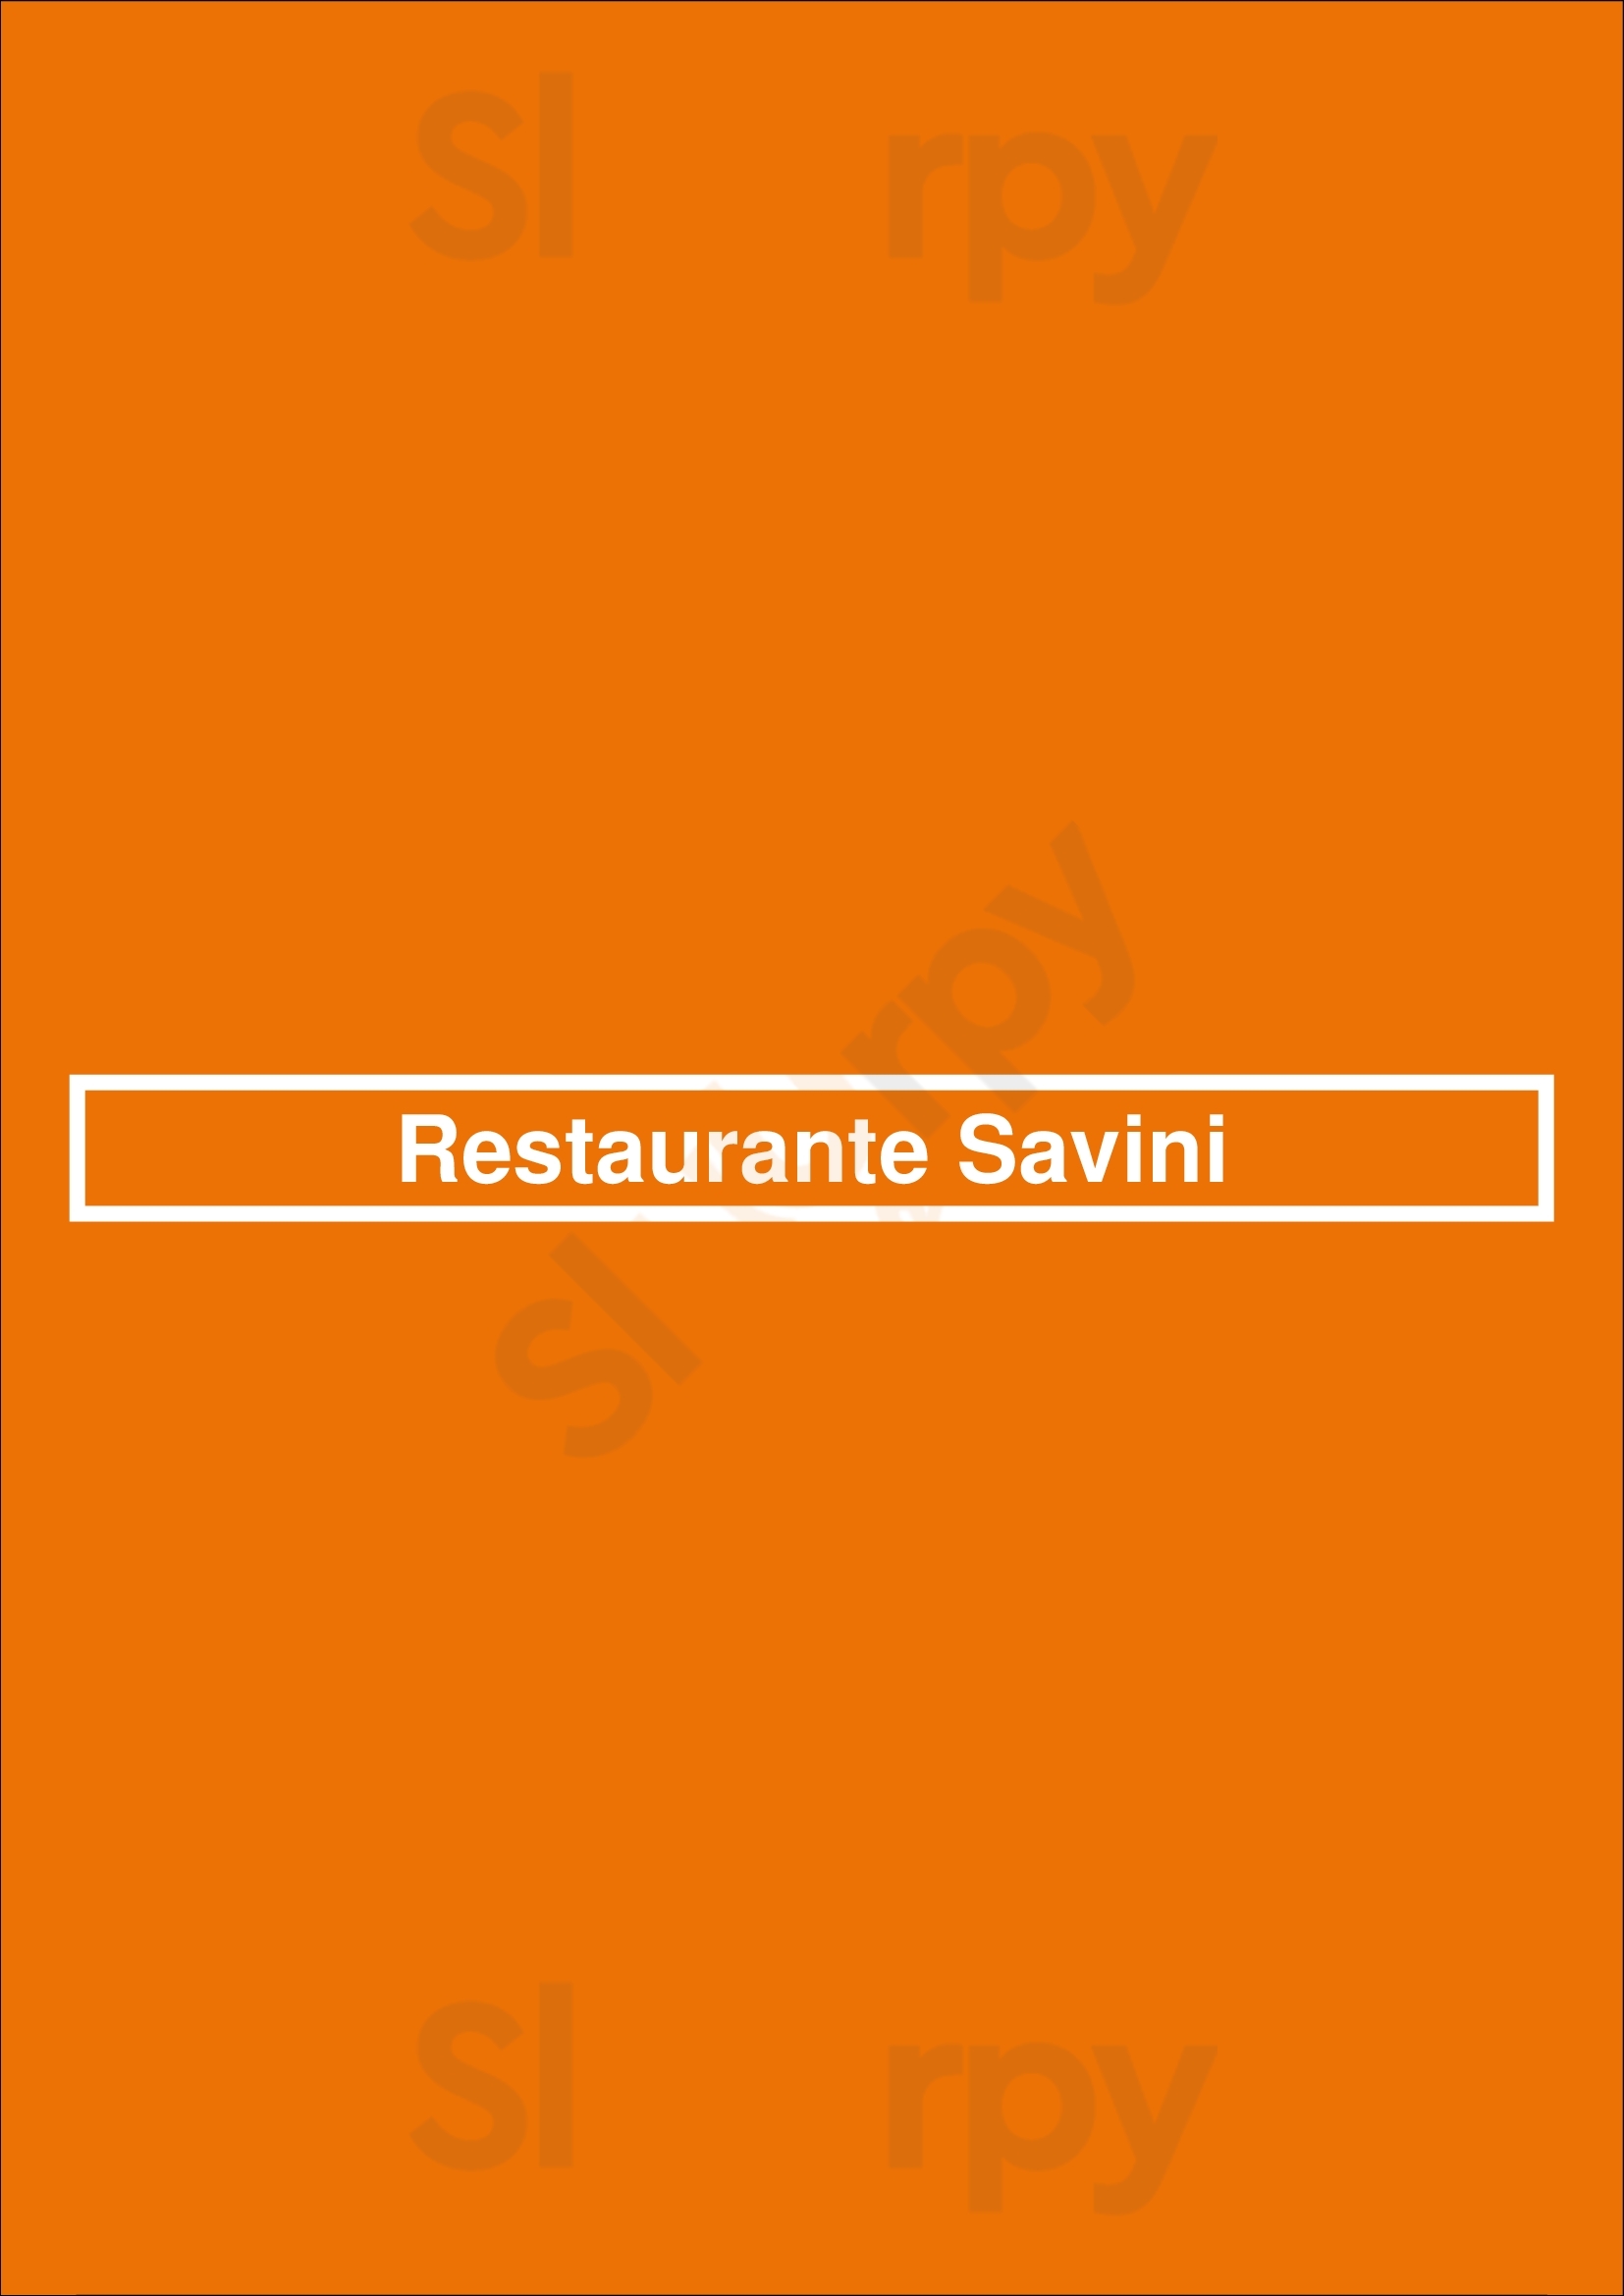 Restaurante Savini Amsterdam Menu - 1